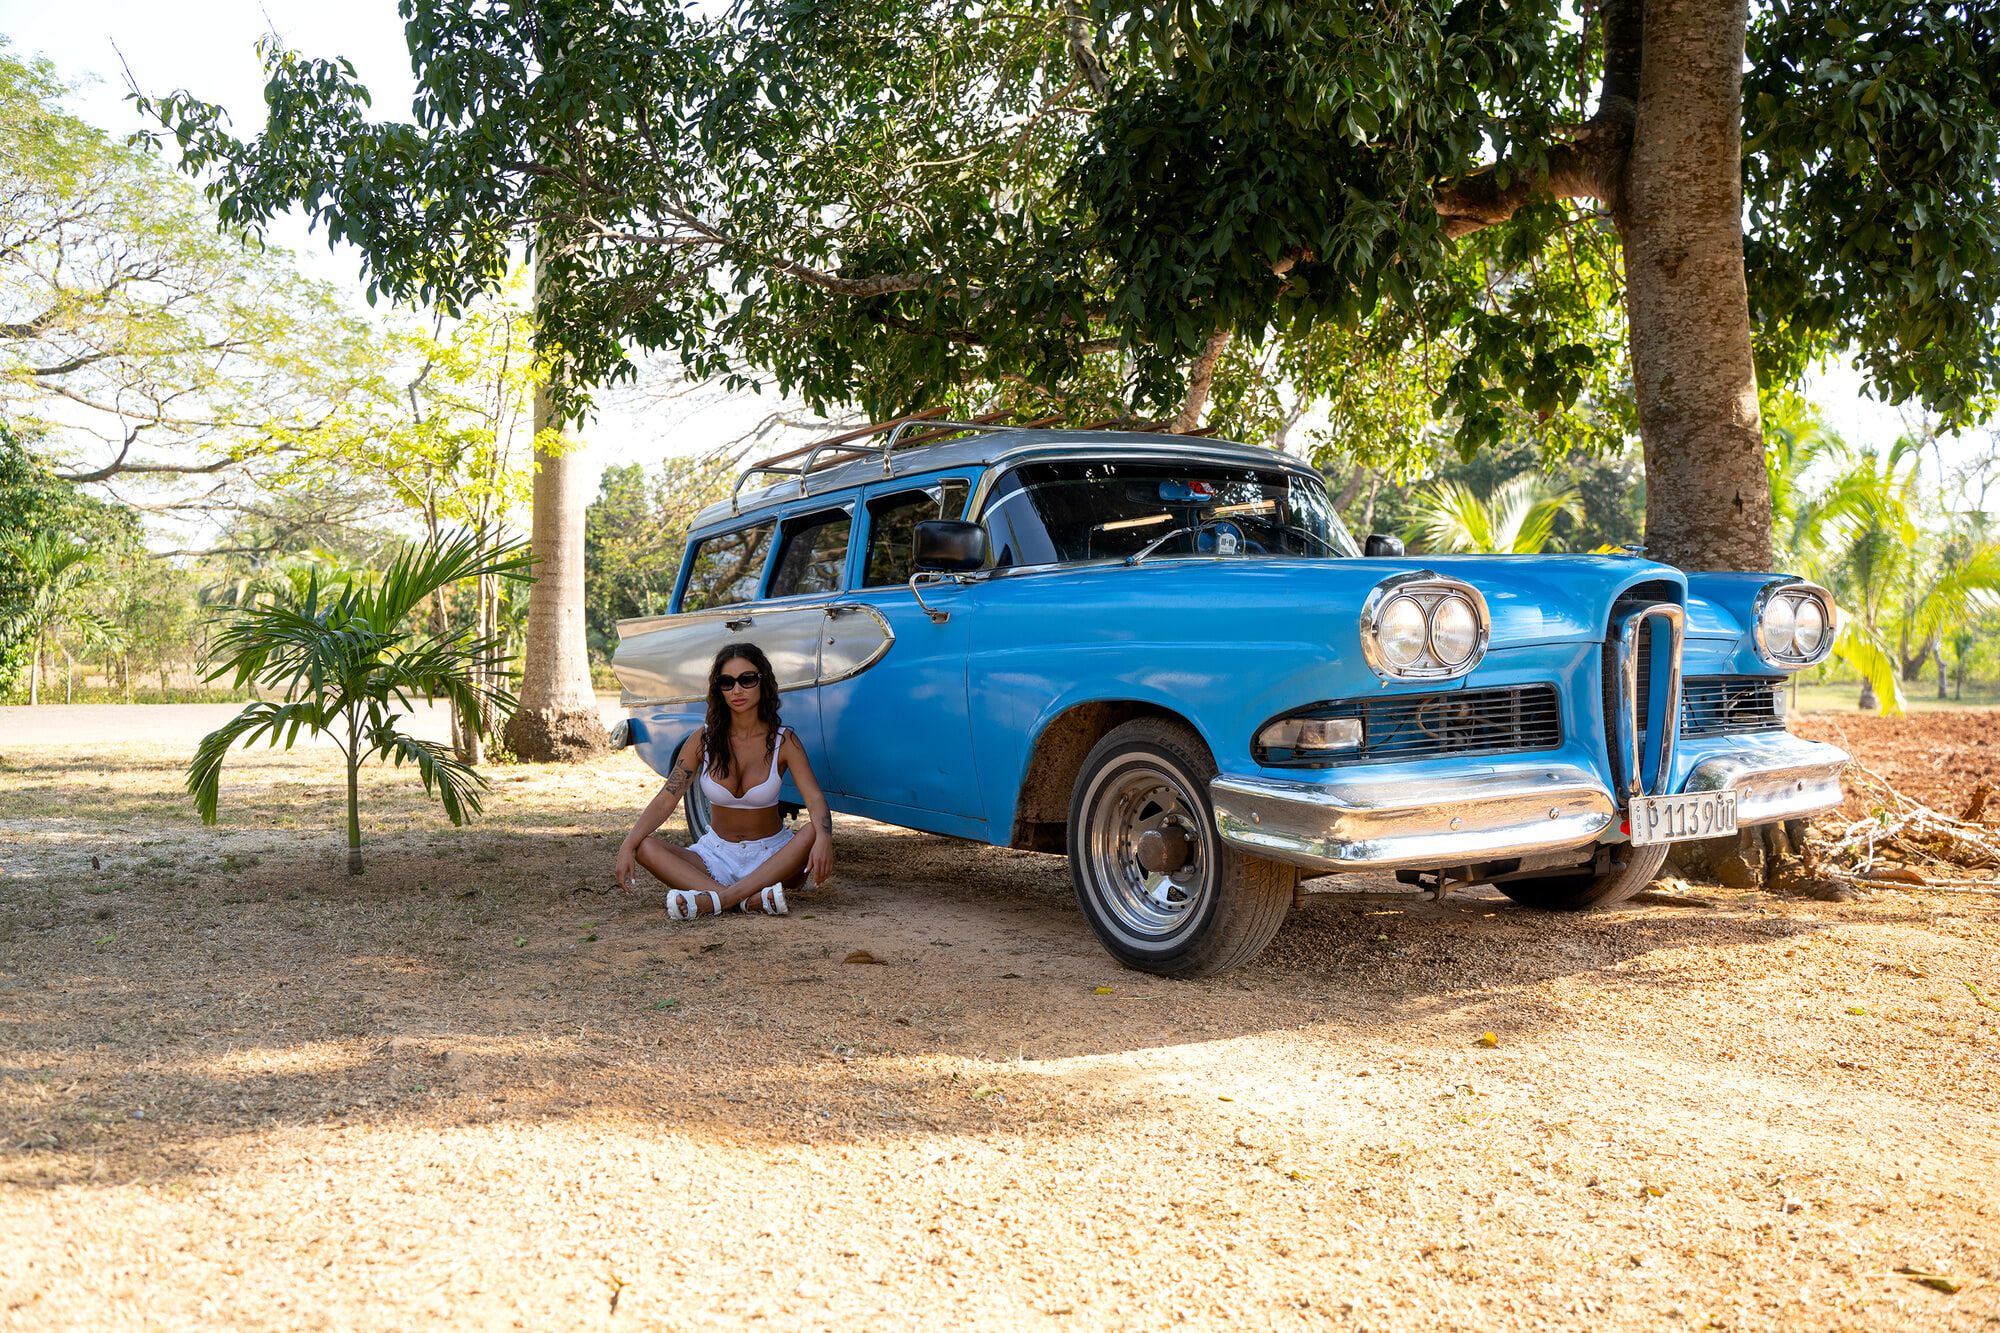 Monika Fox In White Next To A Vintage Car In Cuba #2